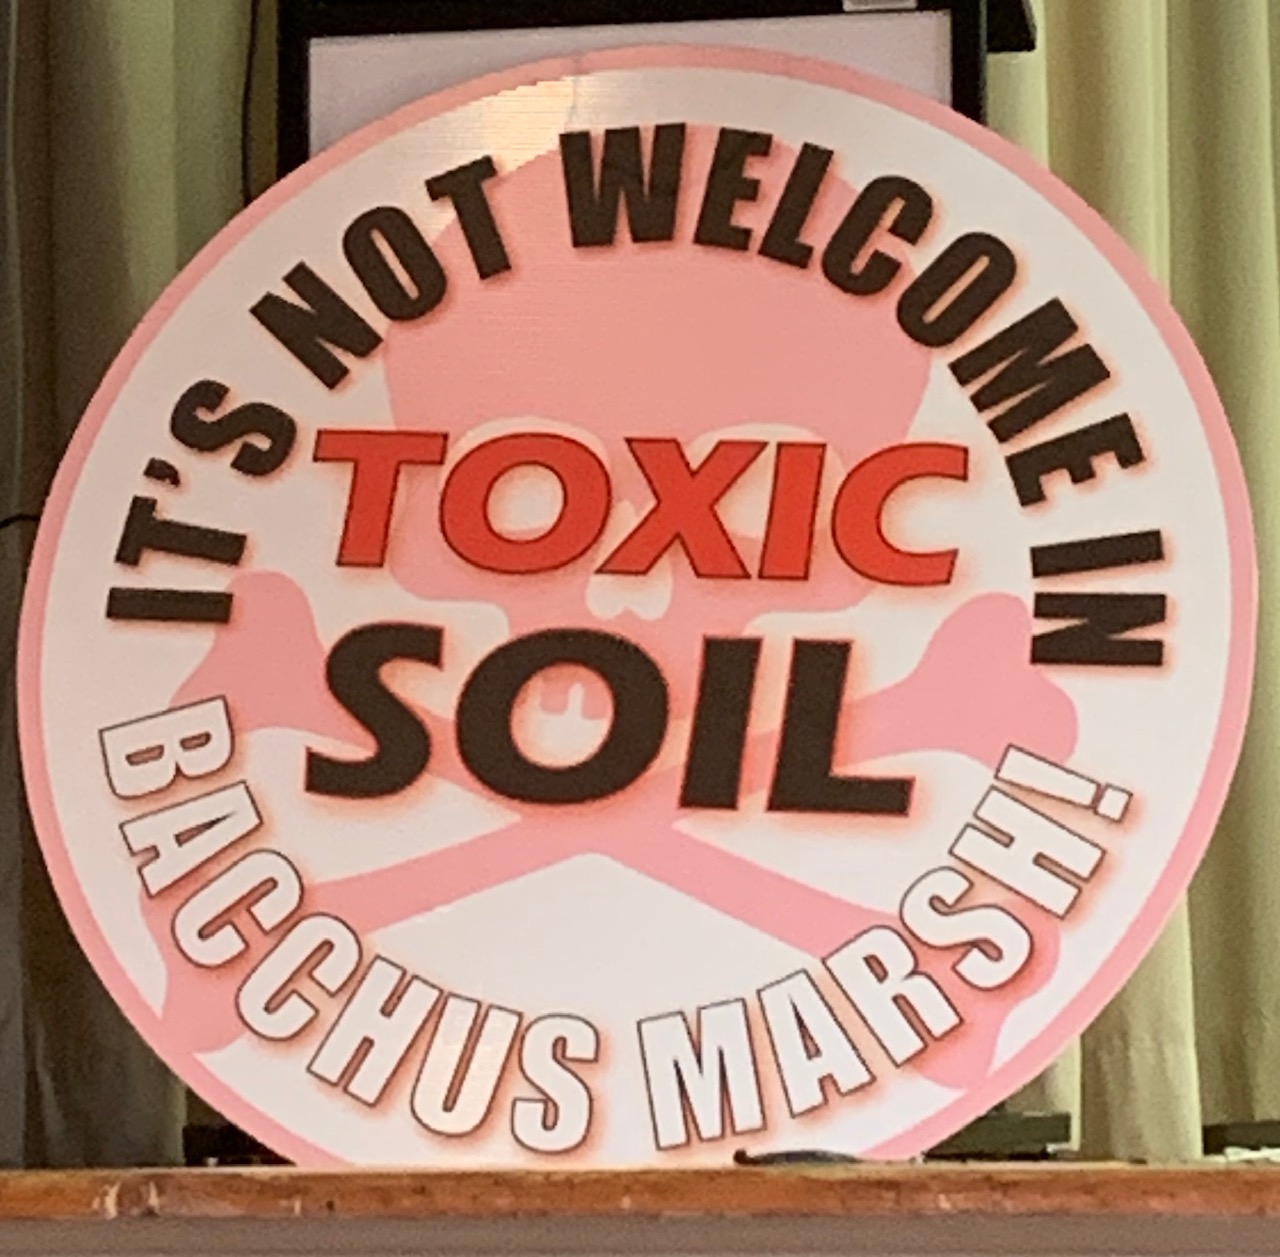 bacchus marsh toxic soil